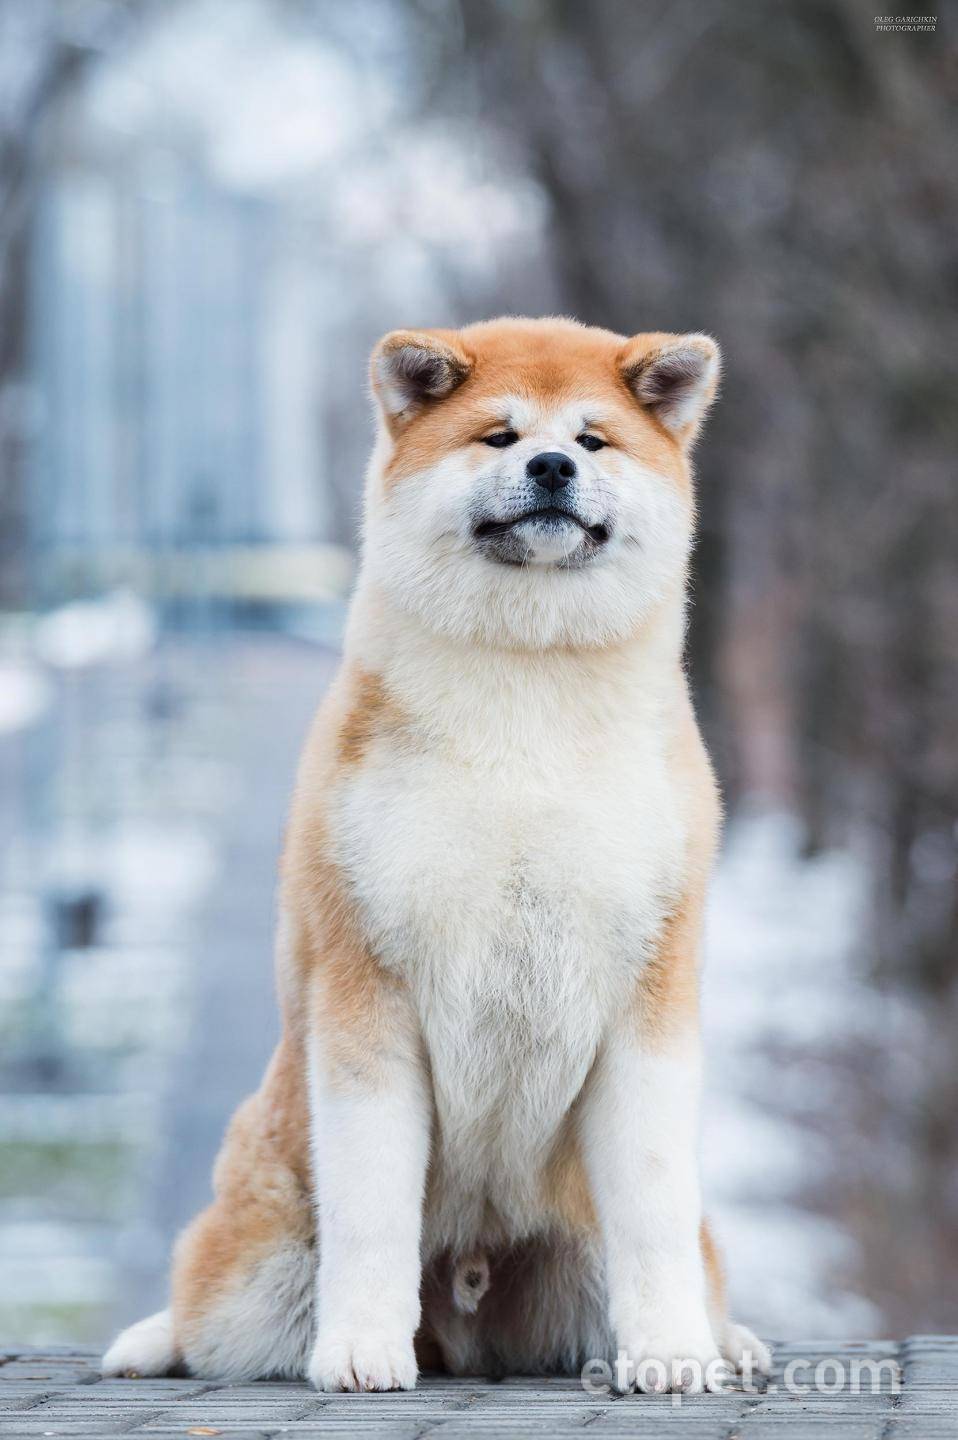 Японские собаки акито: описание породы, фото, цены на акита-ино